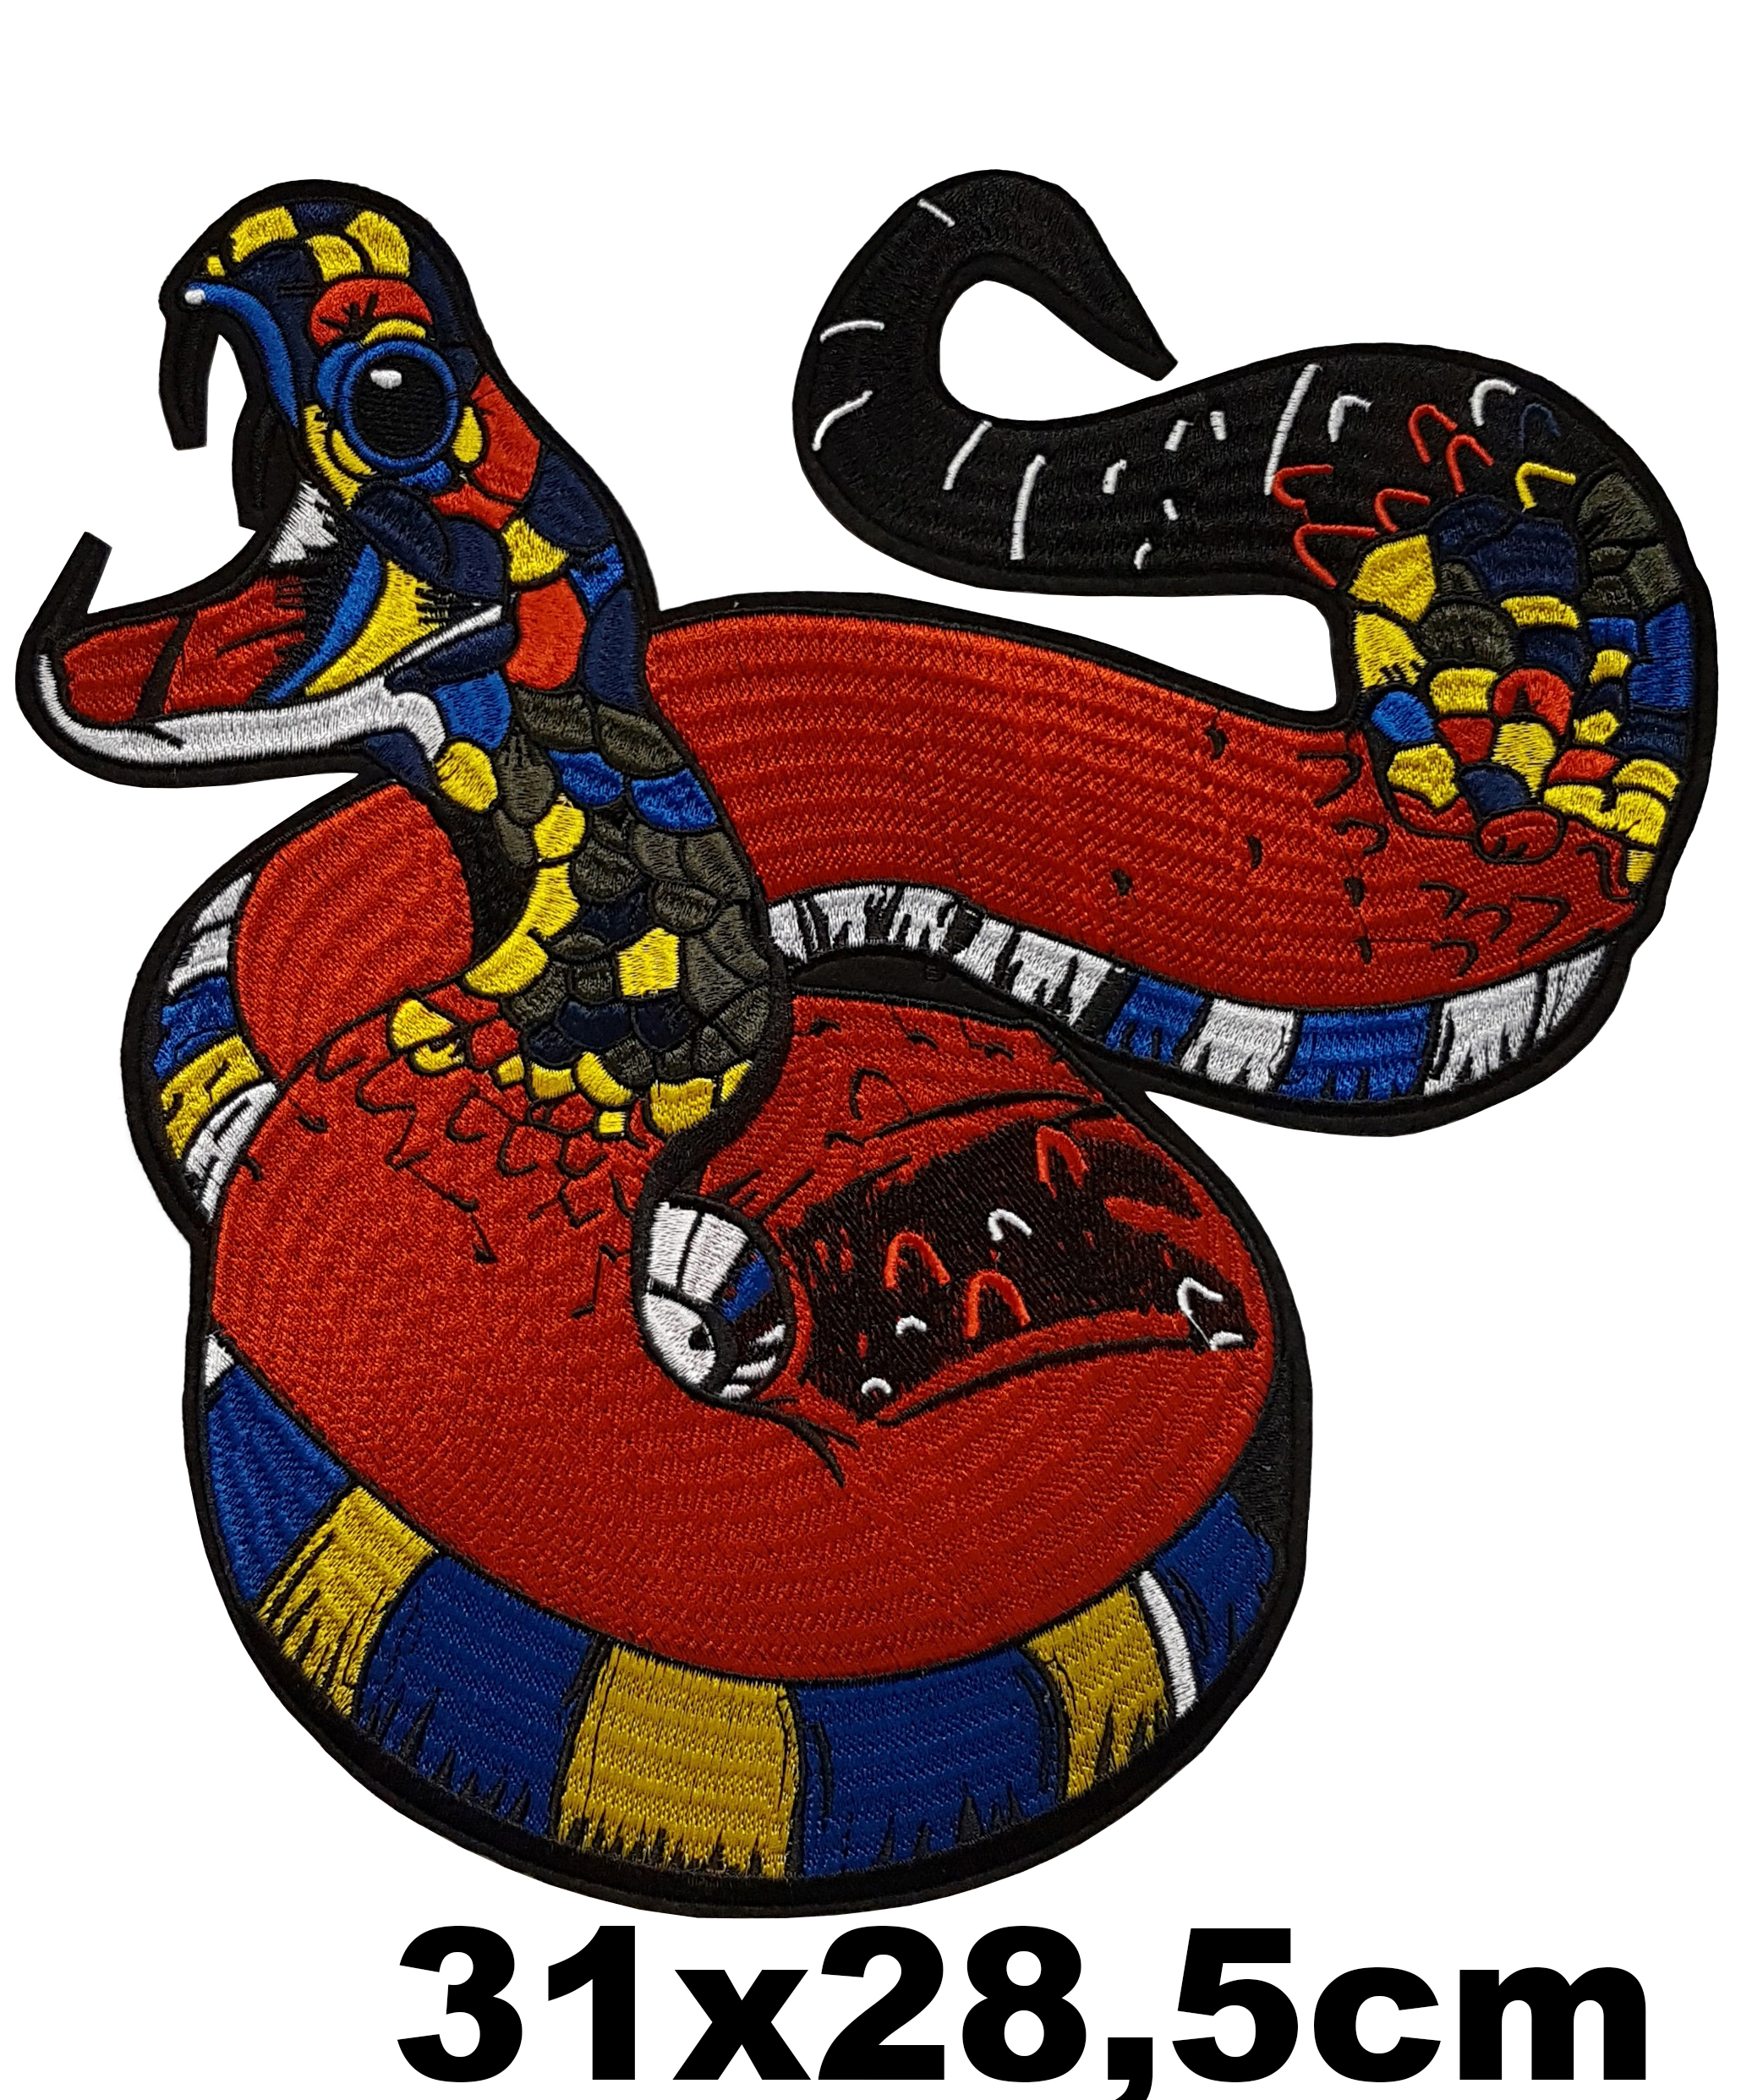 Grand patch thermocollant serpent boa écusson tissu